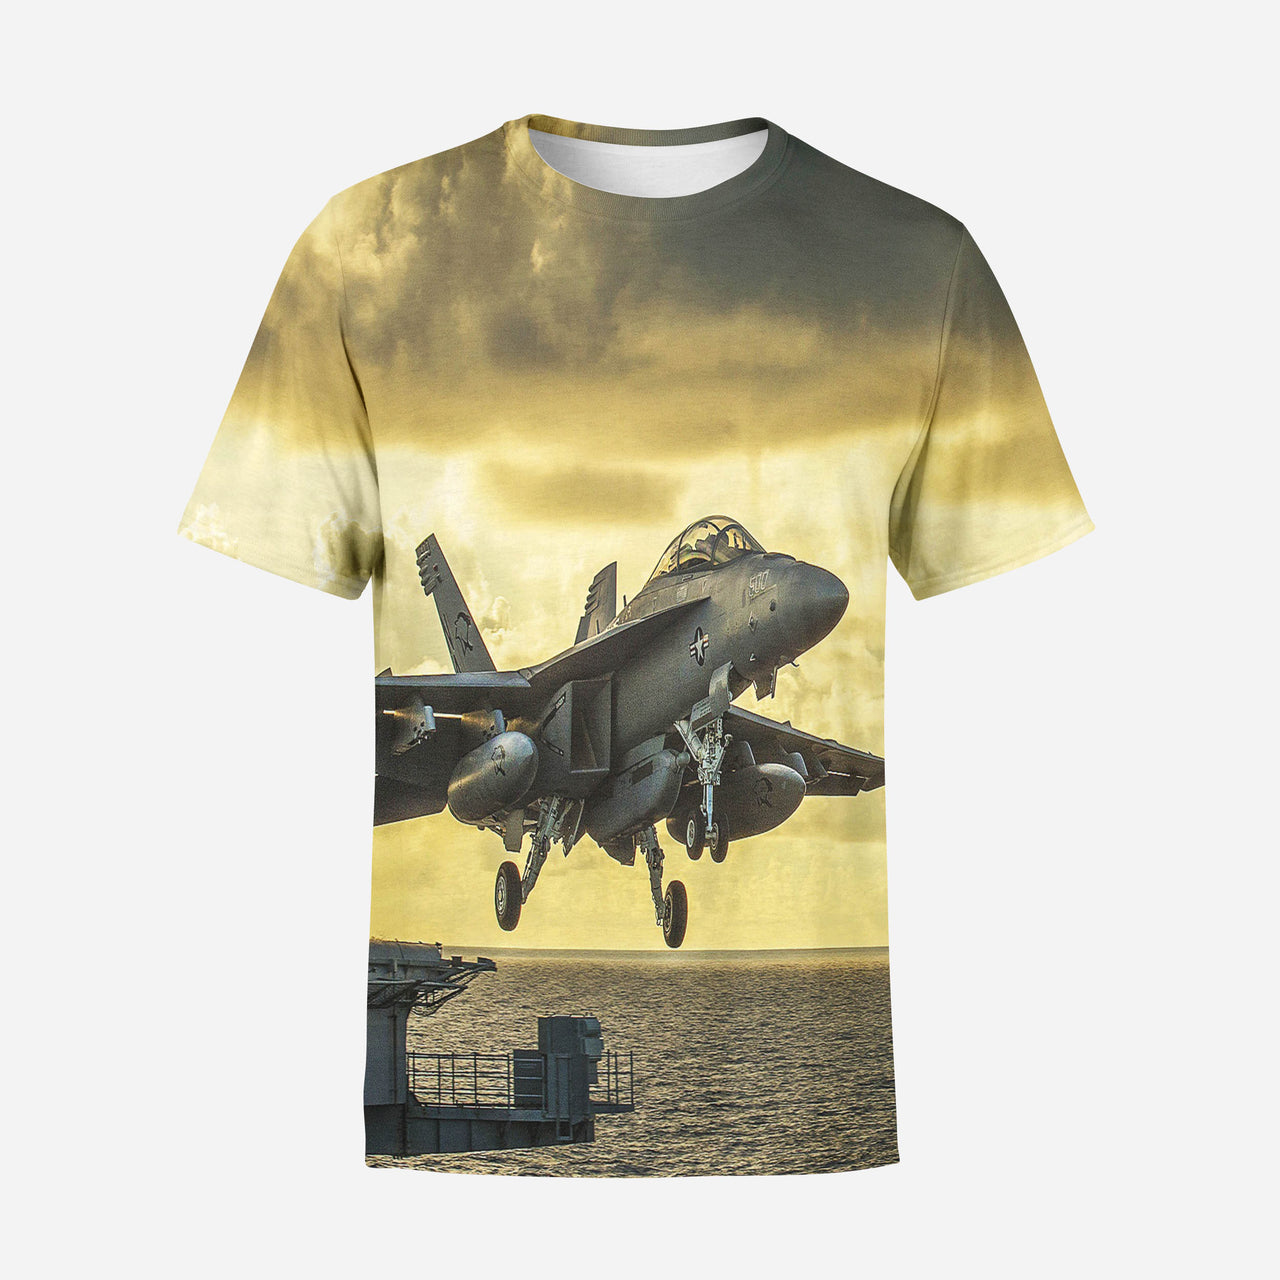 Departing Jet Aircraft Printed 3D T-Shirts